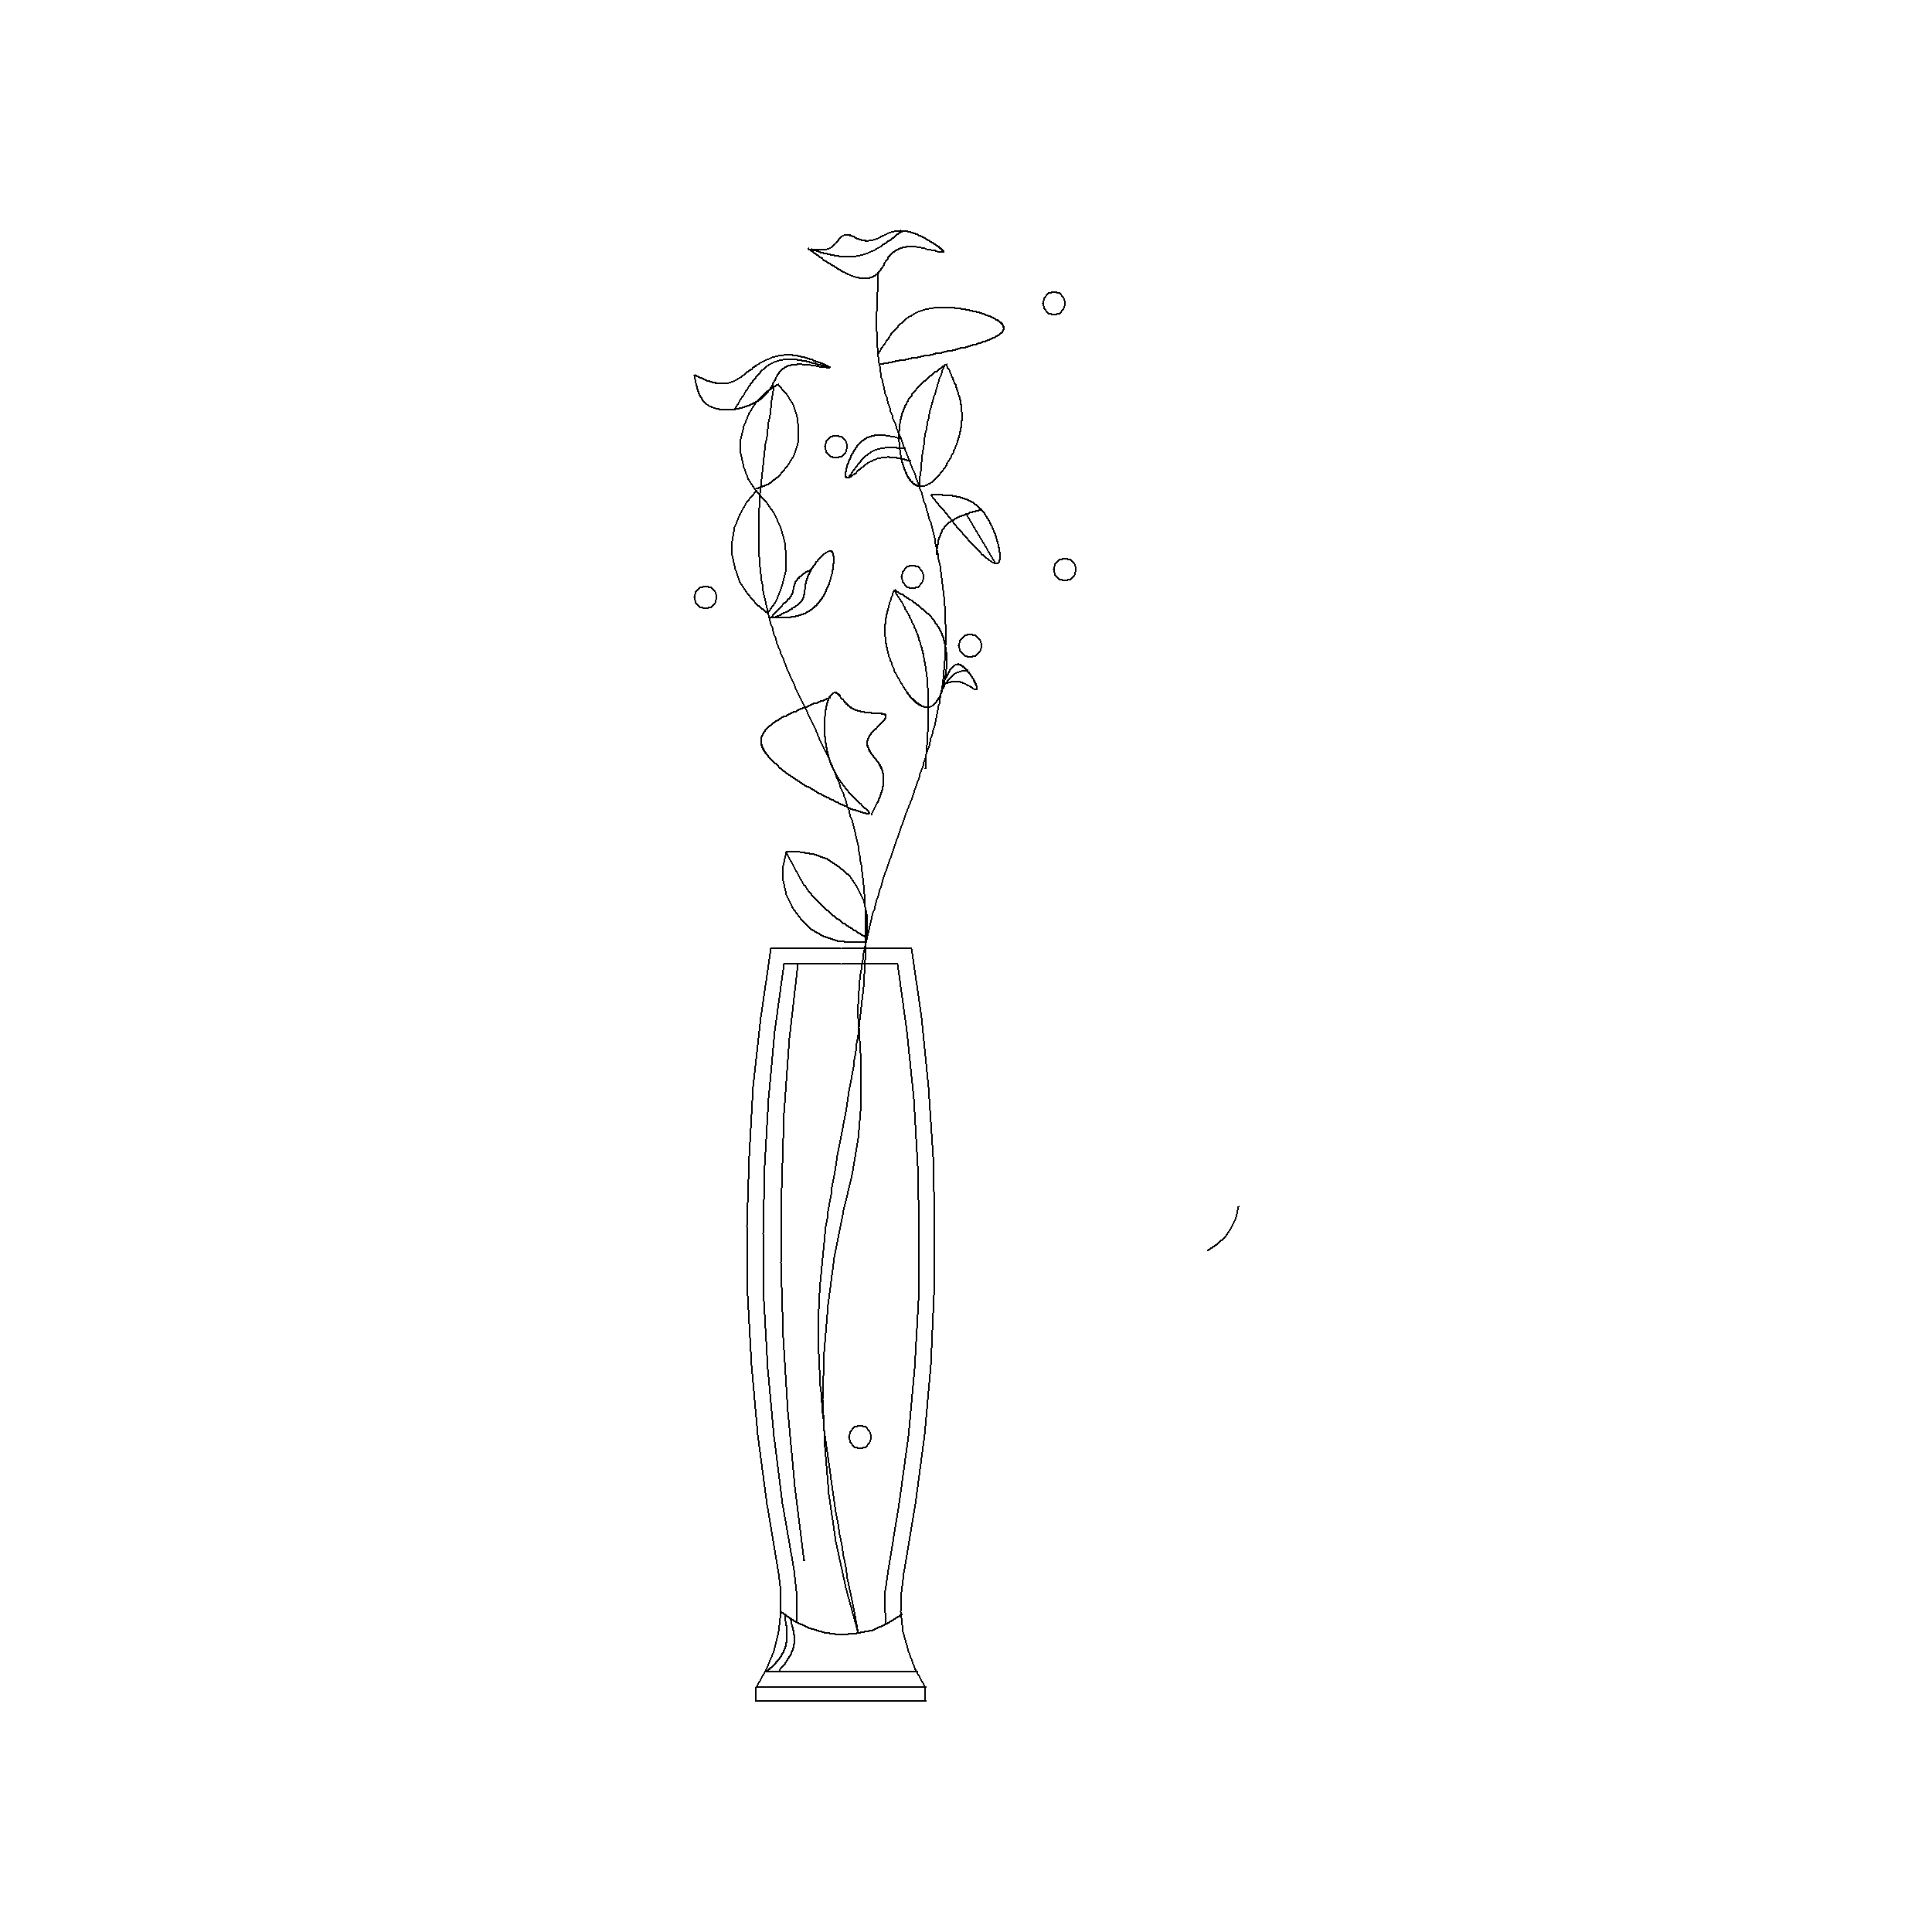 Vase long: 2D Elevation View - Cadblockdwg